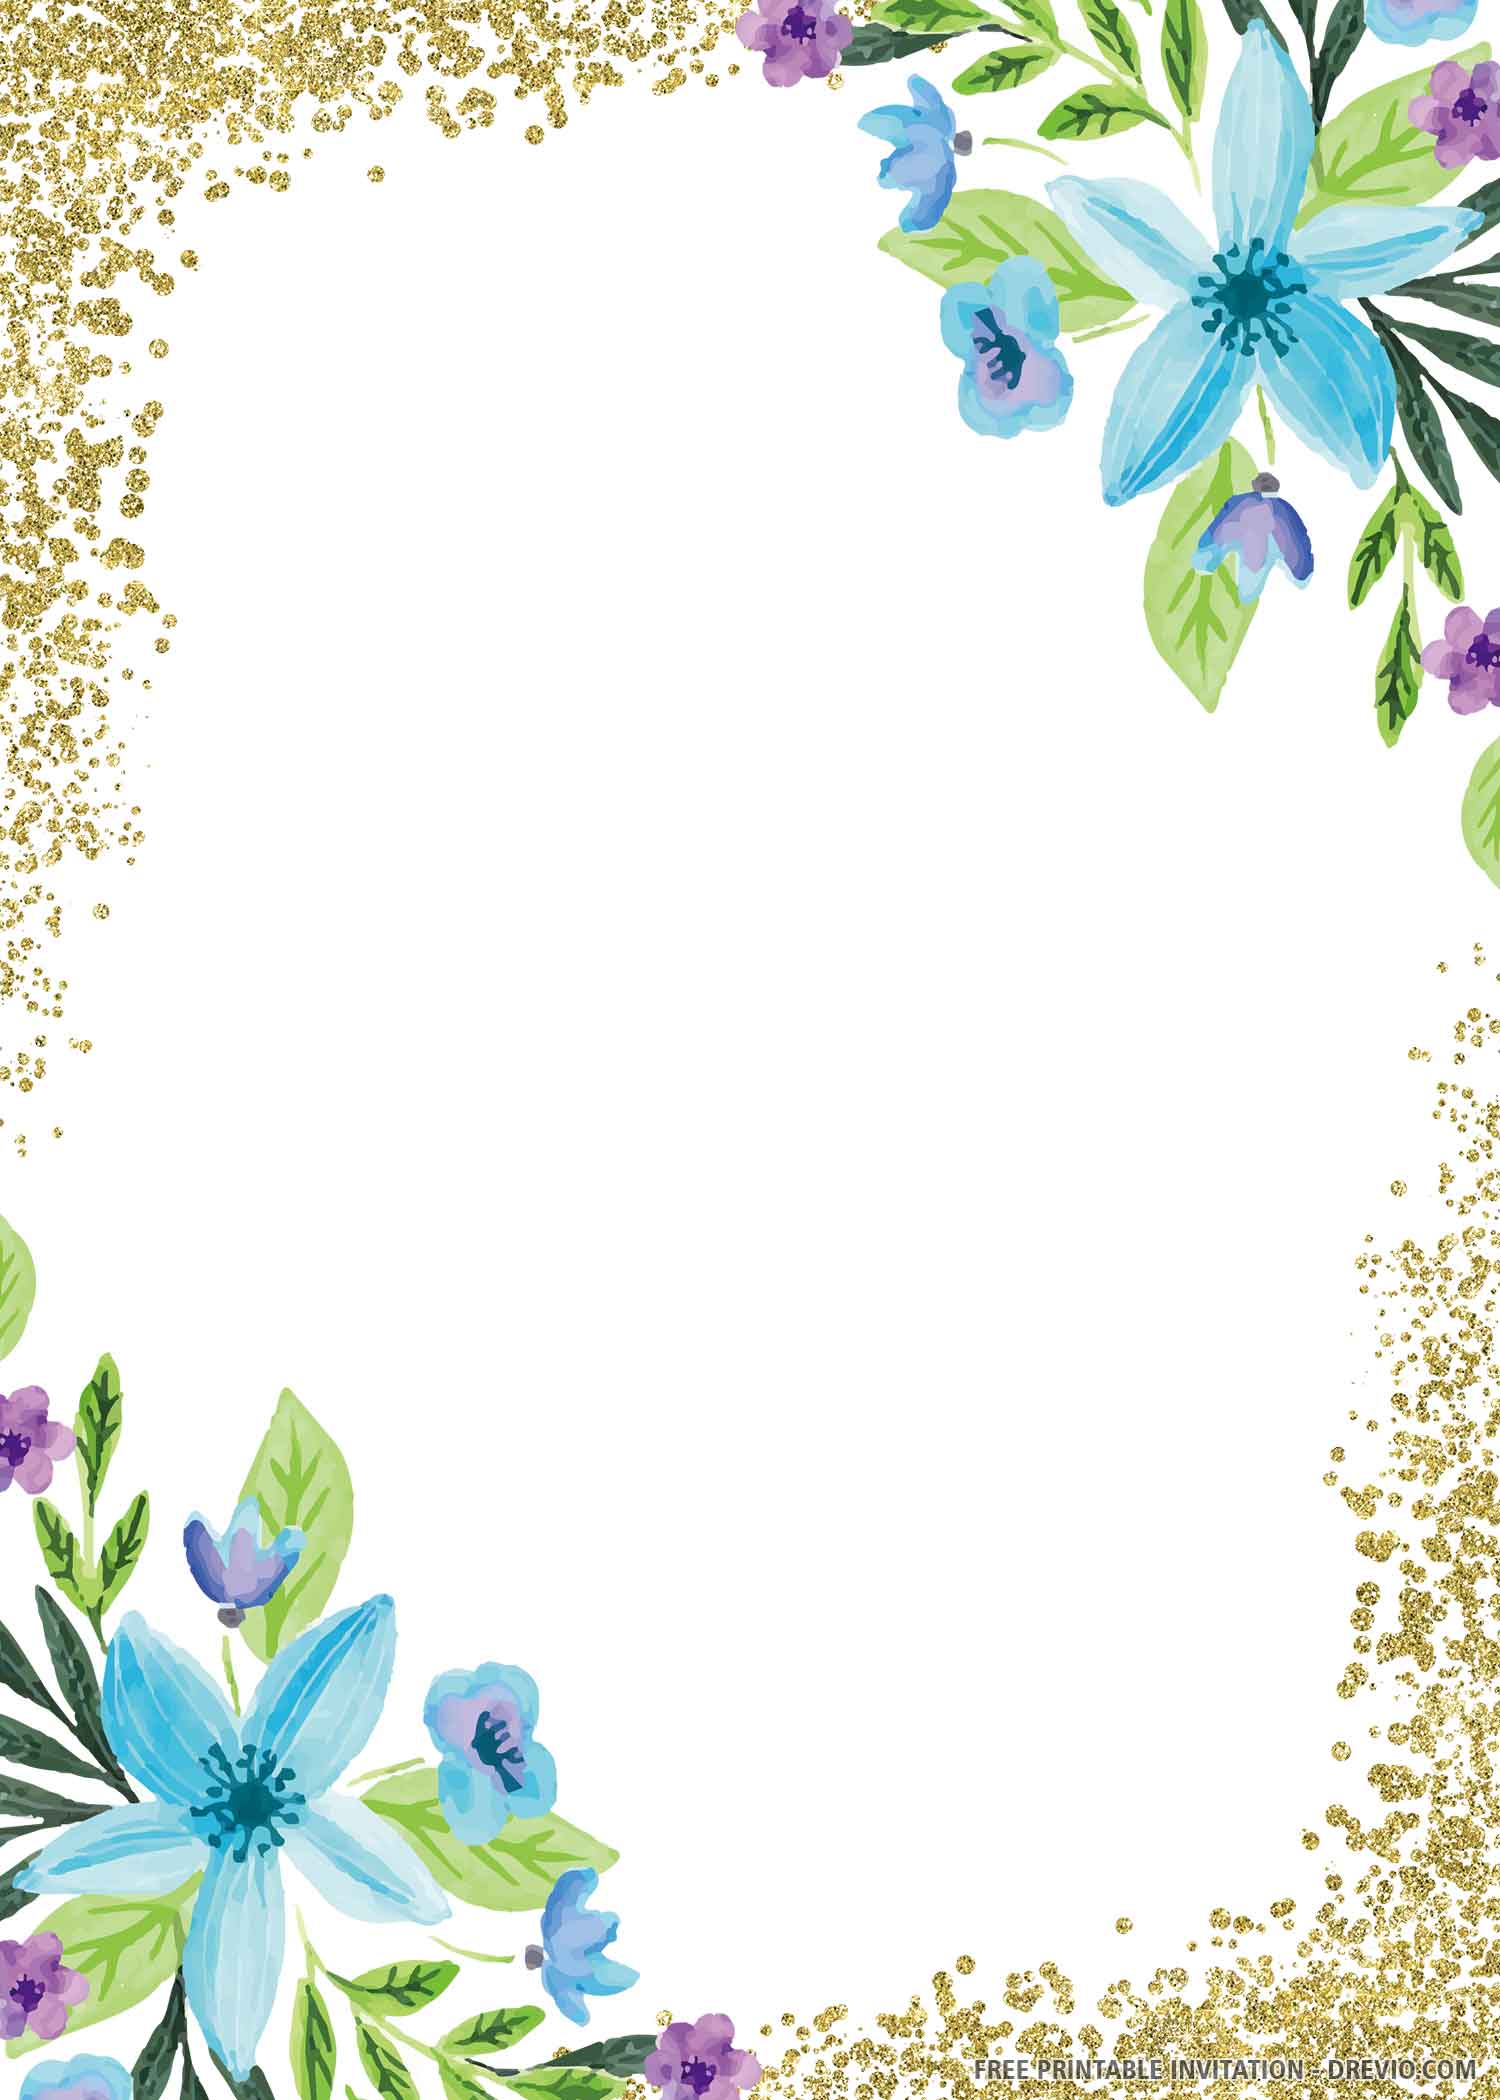 (FREE PRINTABLE) – Blue Floral Wedding Invitation Template | Download Hundreds FREE PRINTABLE